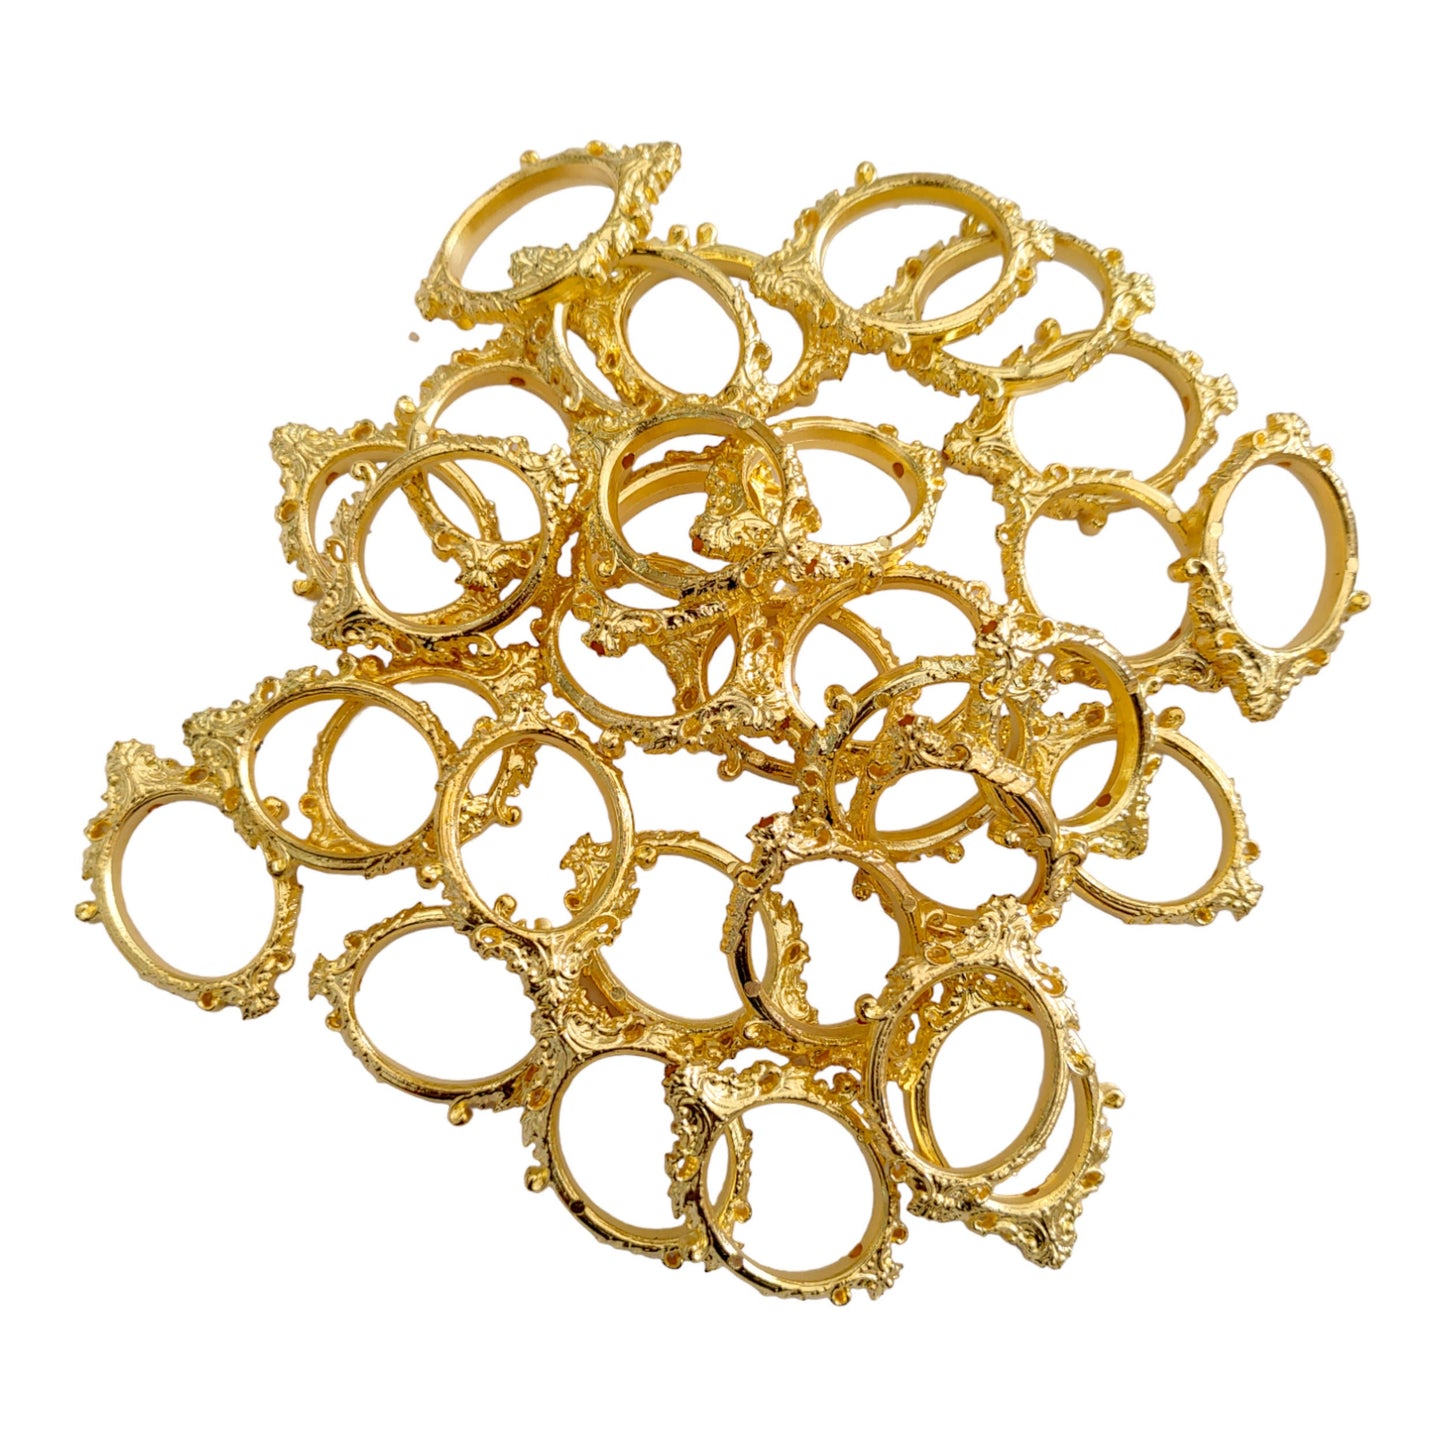 Indian Petals Window Shape CCB Ring Motif for Rakhi, Jewelry making, Craft or Decor